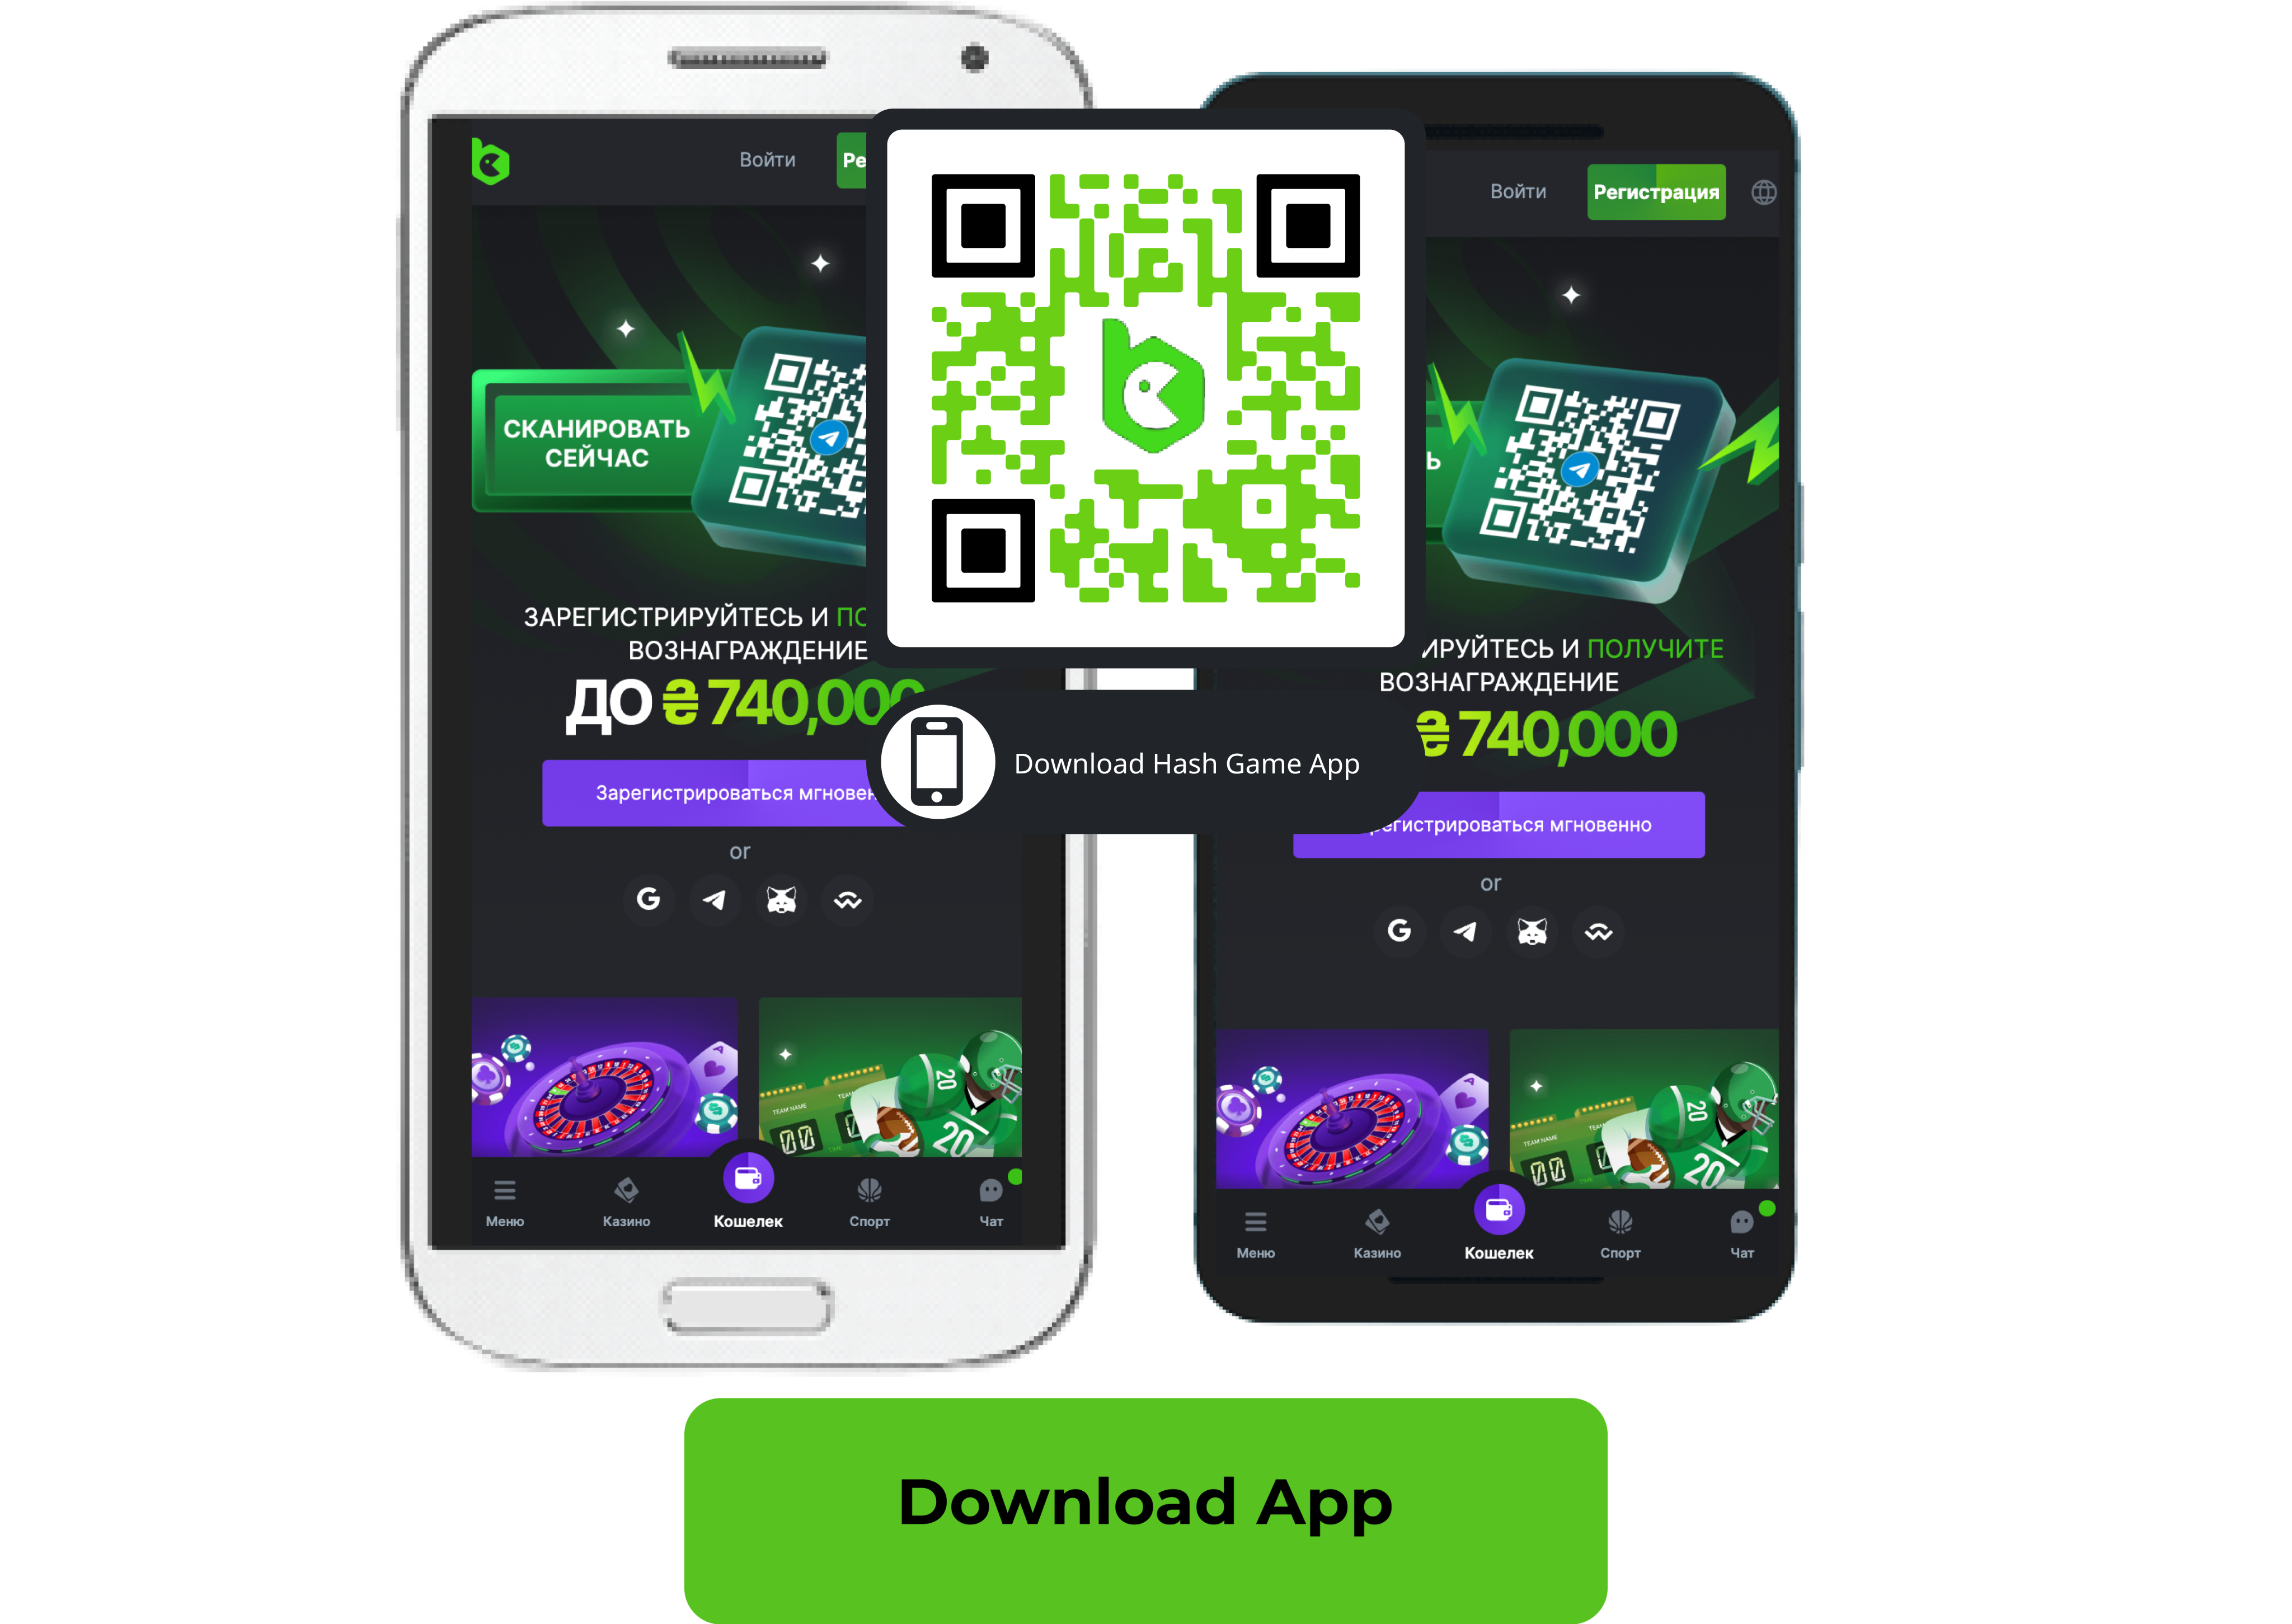 hash game app download